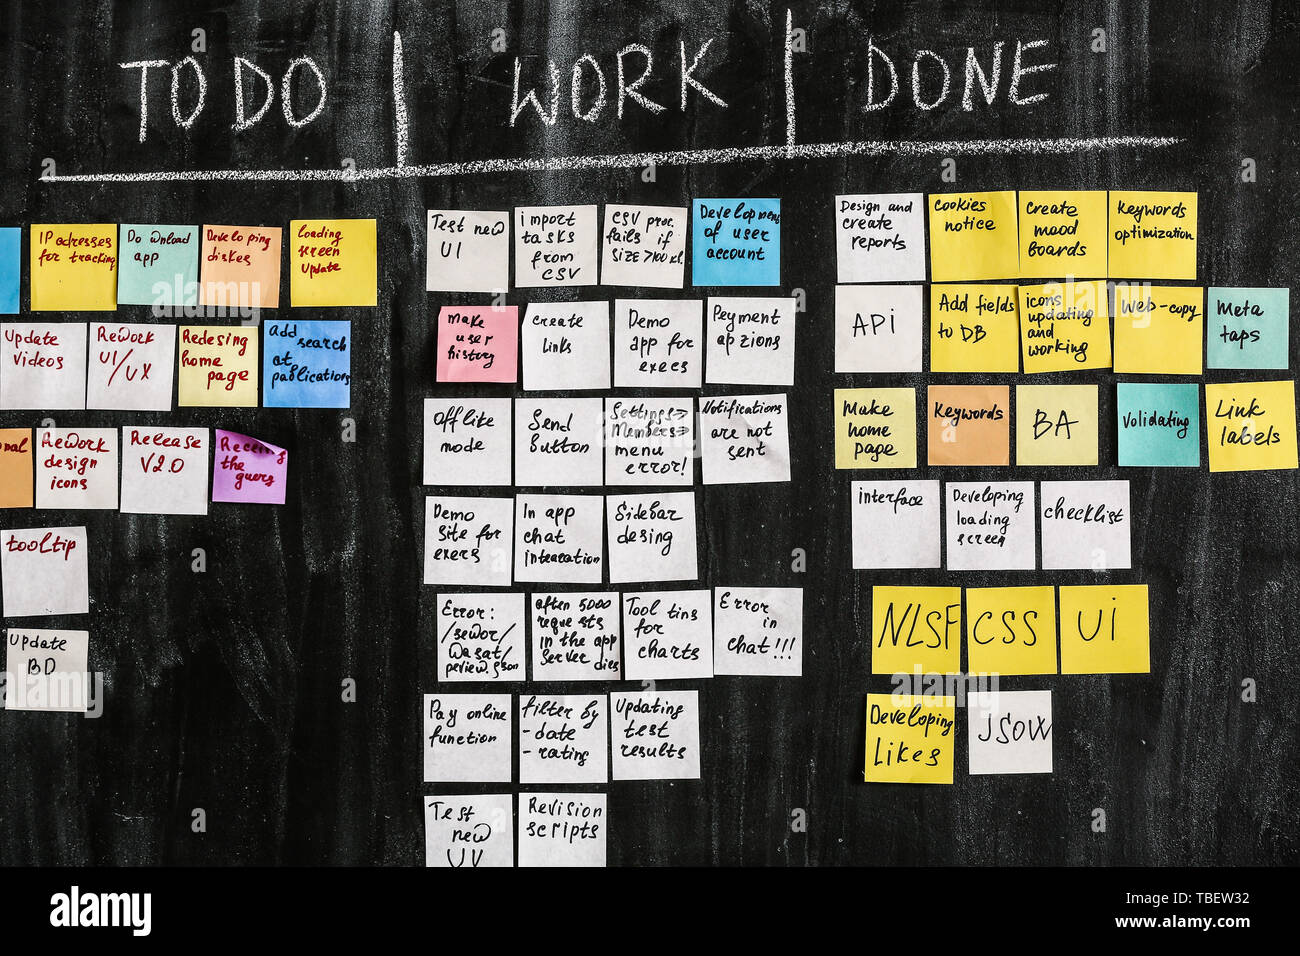 Scrum task board on dark wall in office Stock Photo - Alamy